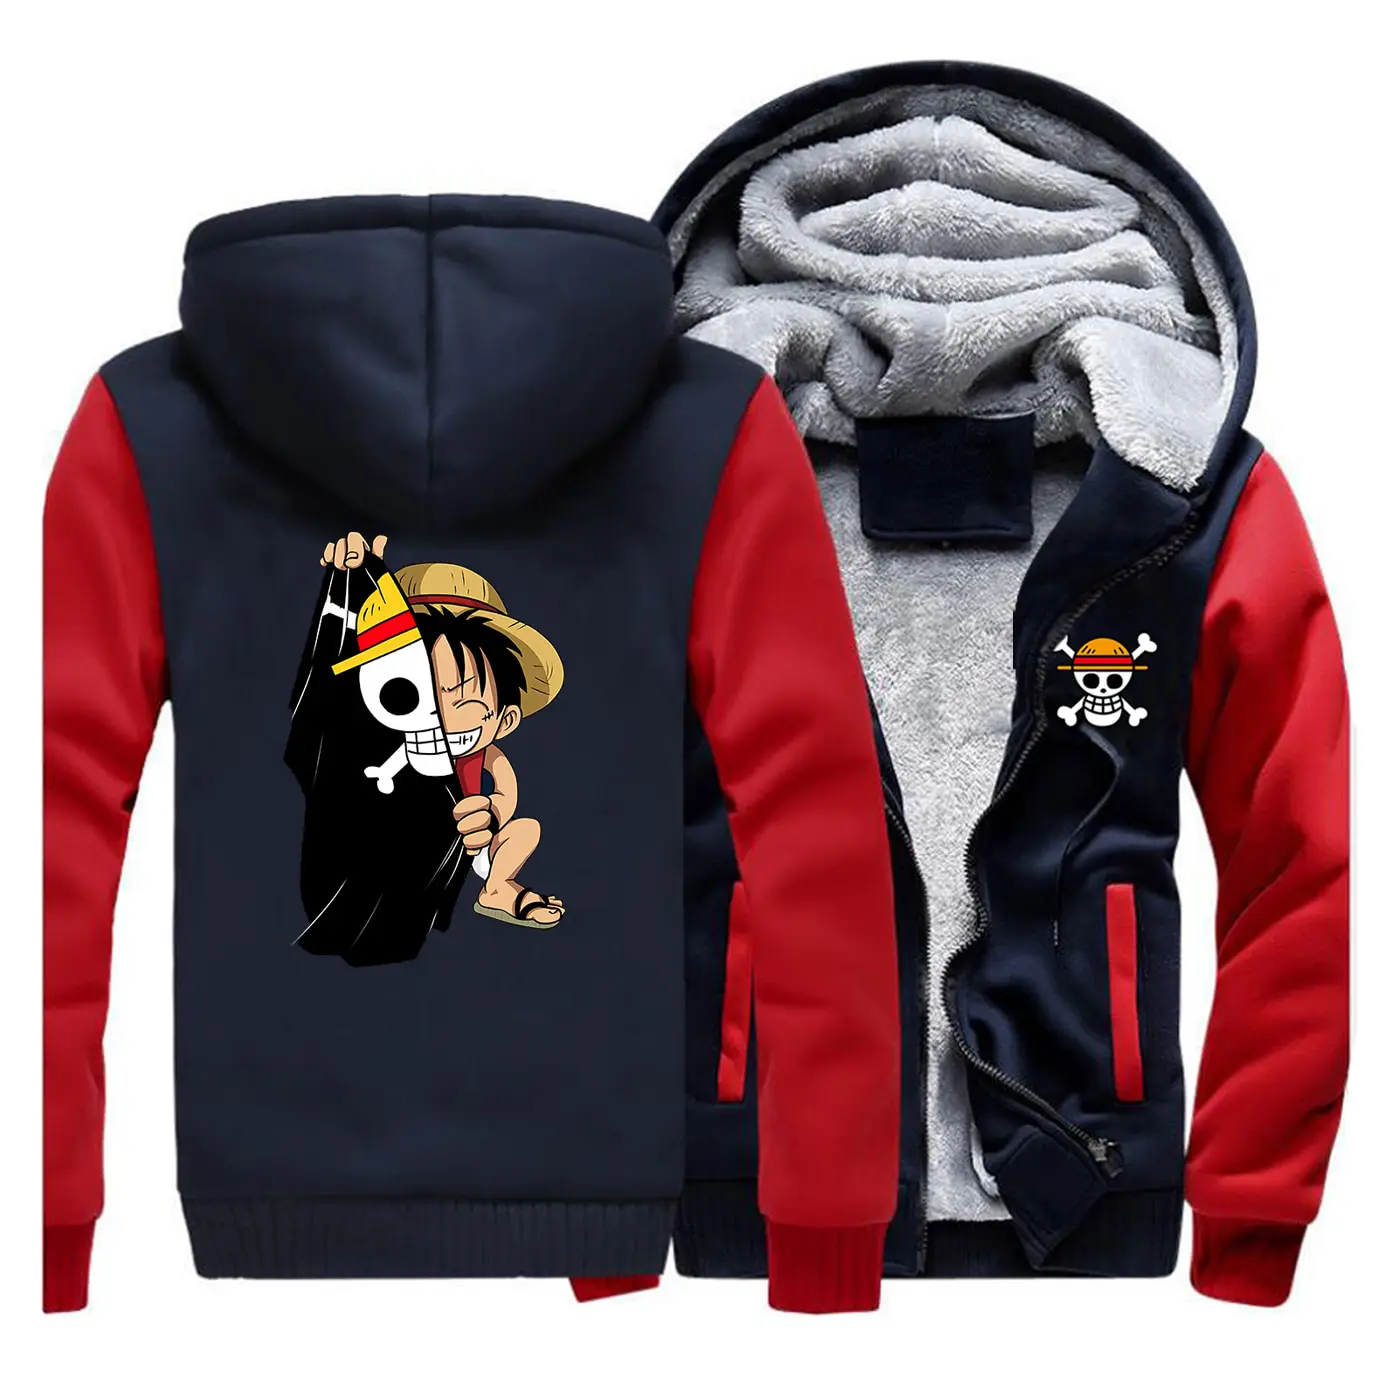 One Piece – Luffy themed Hoodies (7 Designs) Hoodies & Sweatshirts